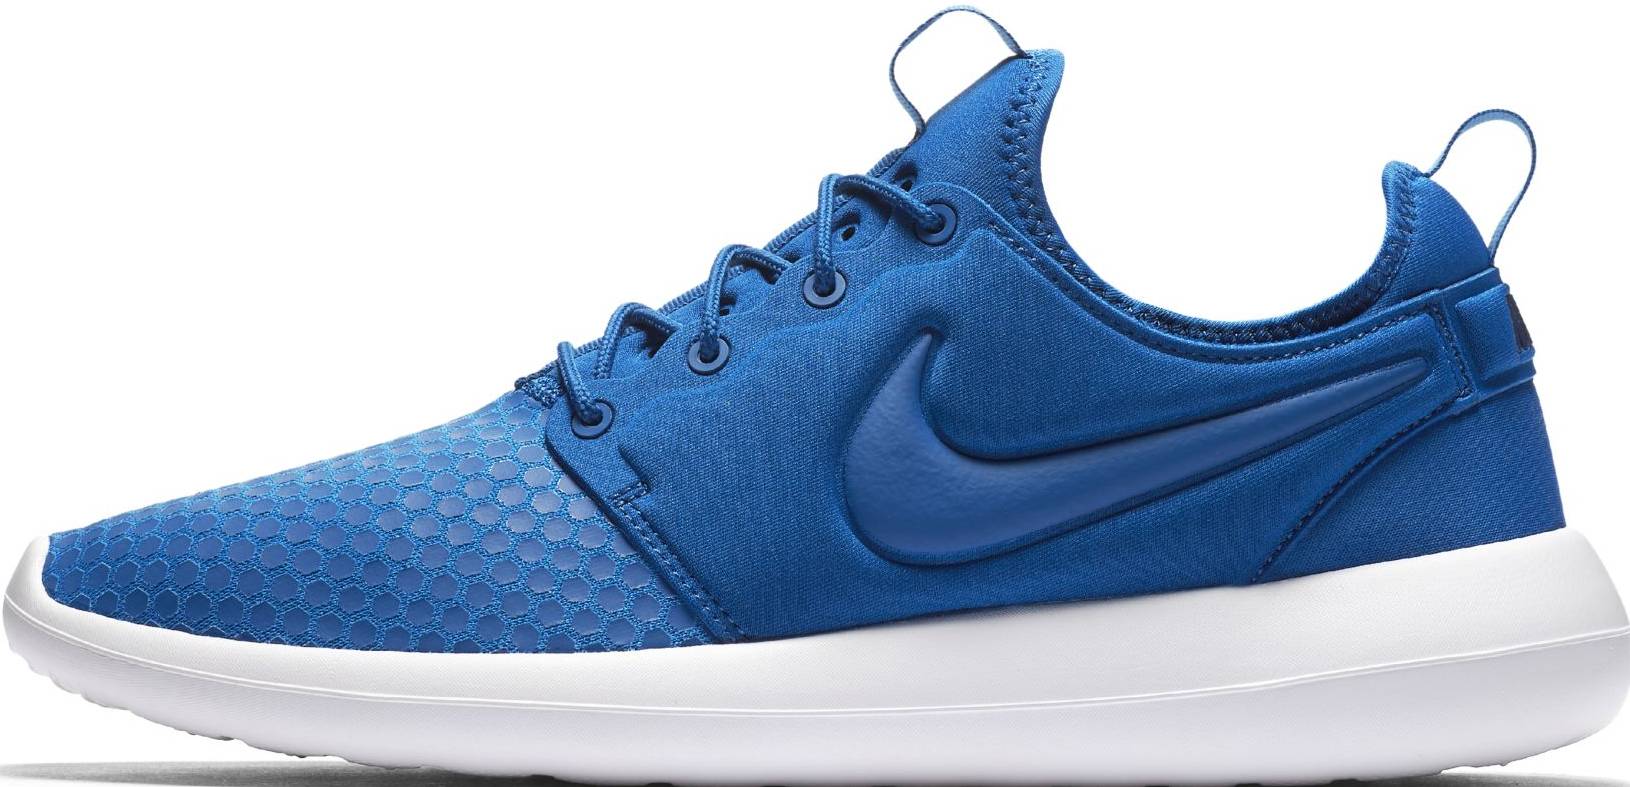 Nike Roshe Two SE sneakers in blue 